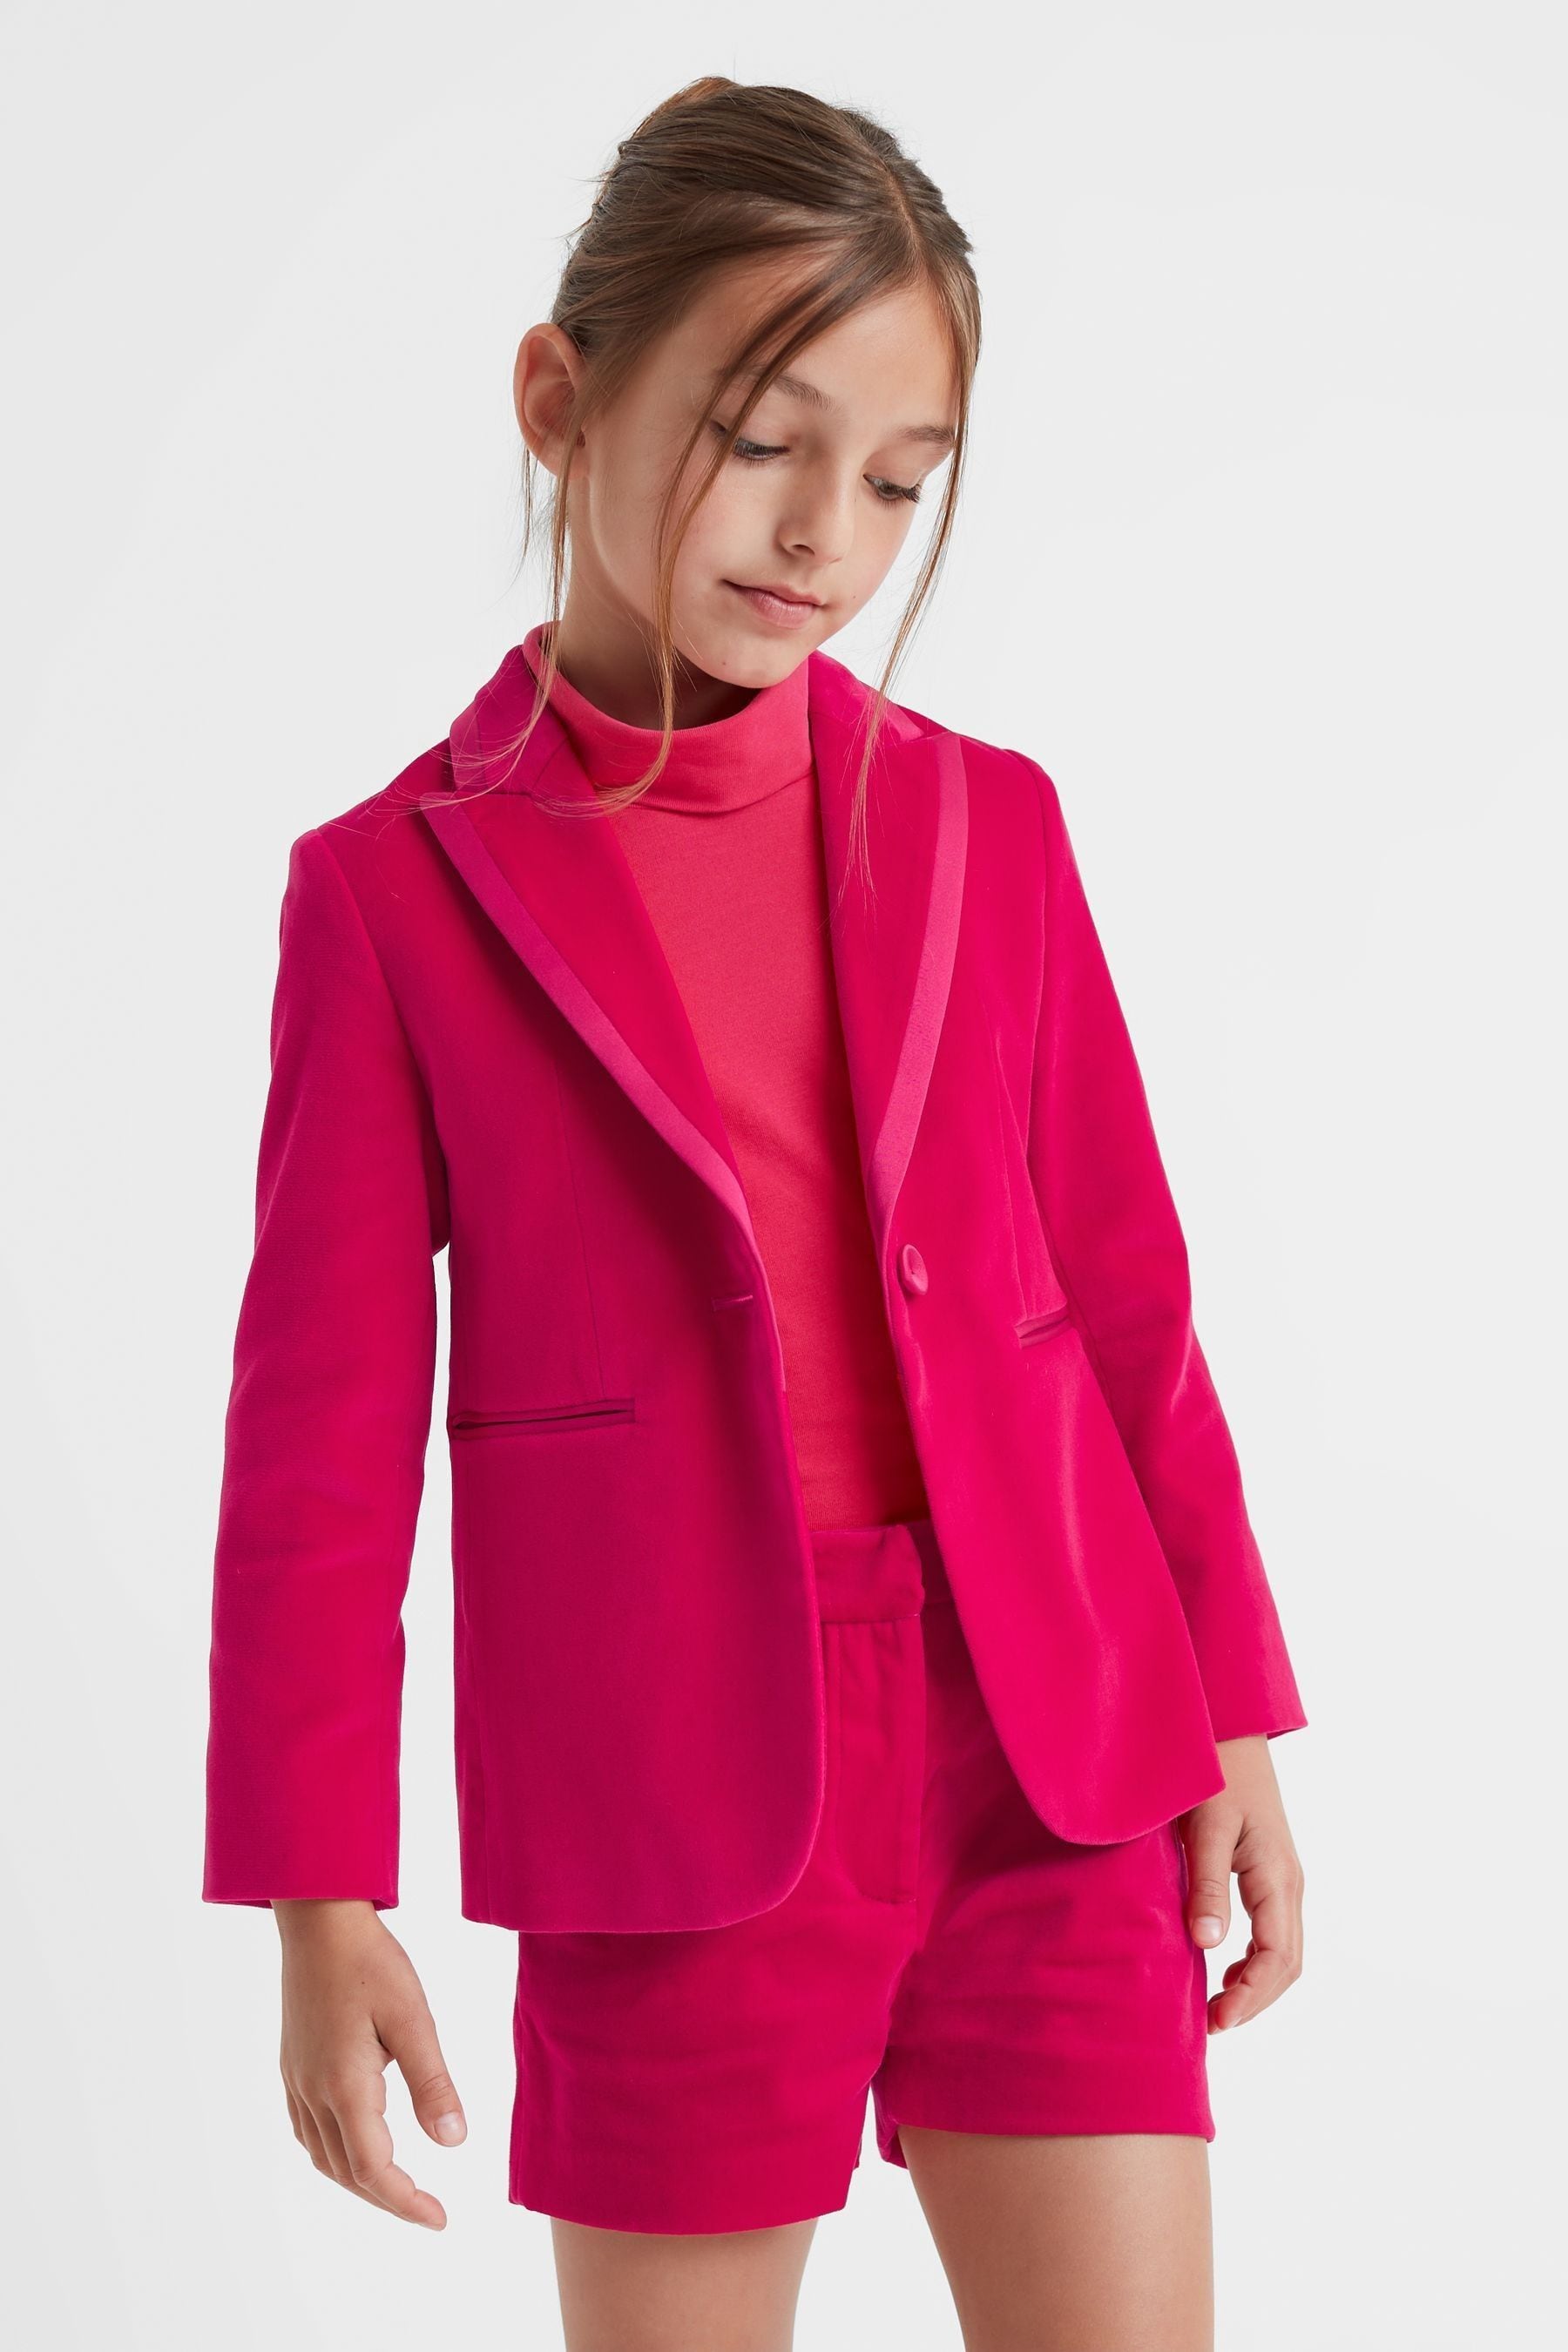 Reiss Kids' Bree - Bright Pink Junior Single Breasted Velvet Blazer, Age 6-7 Years